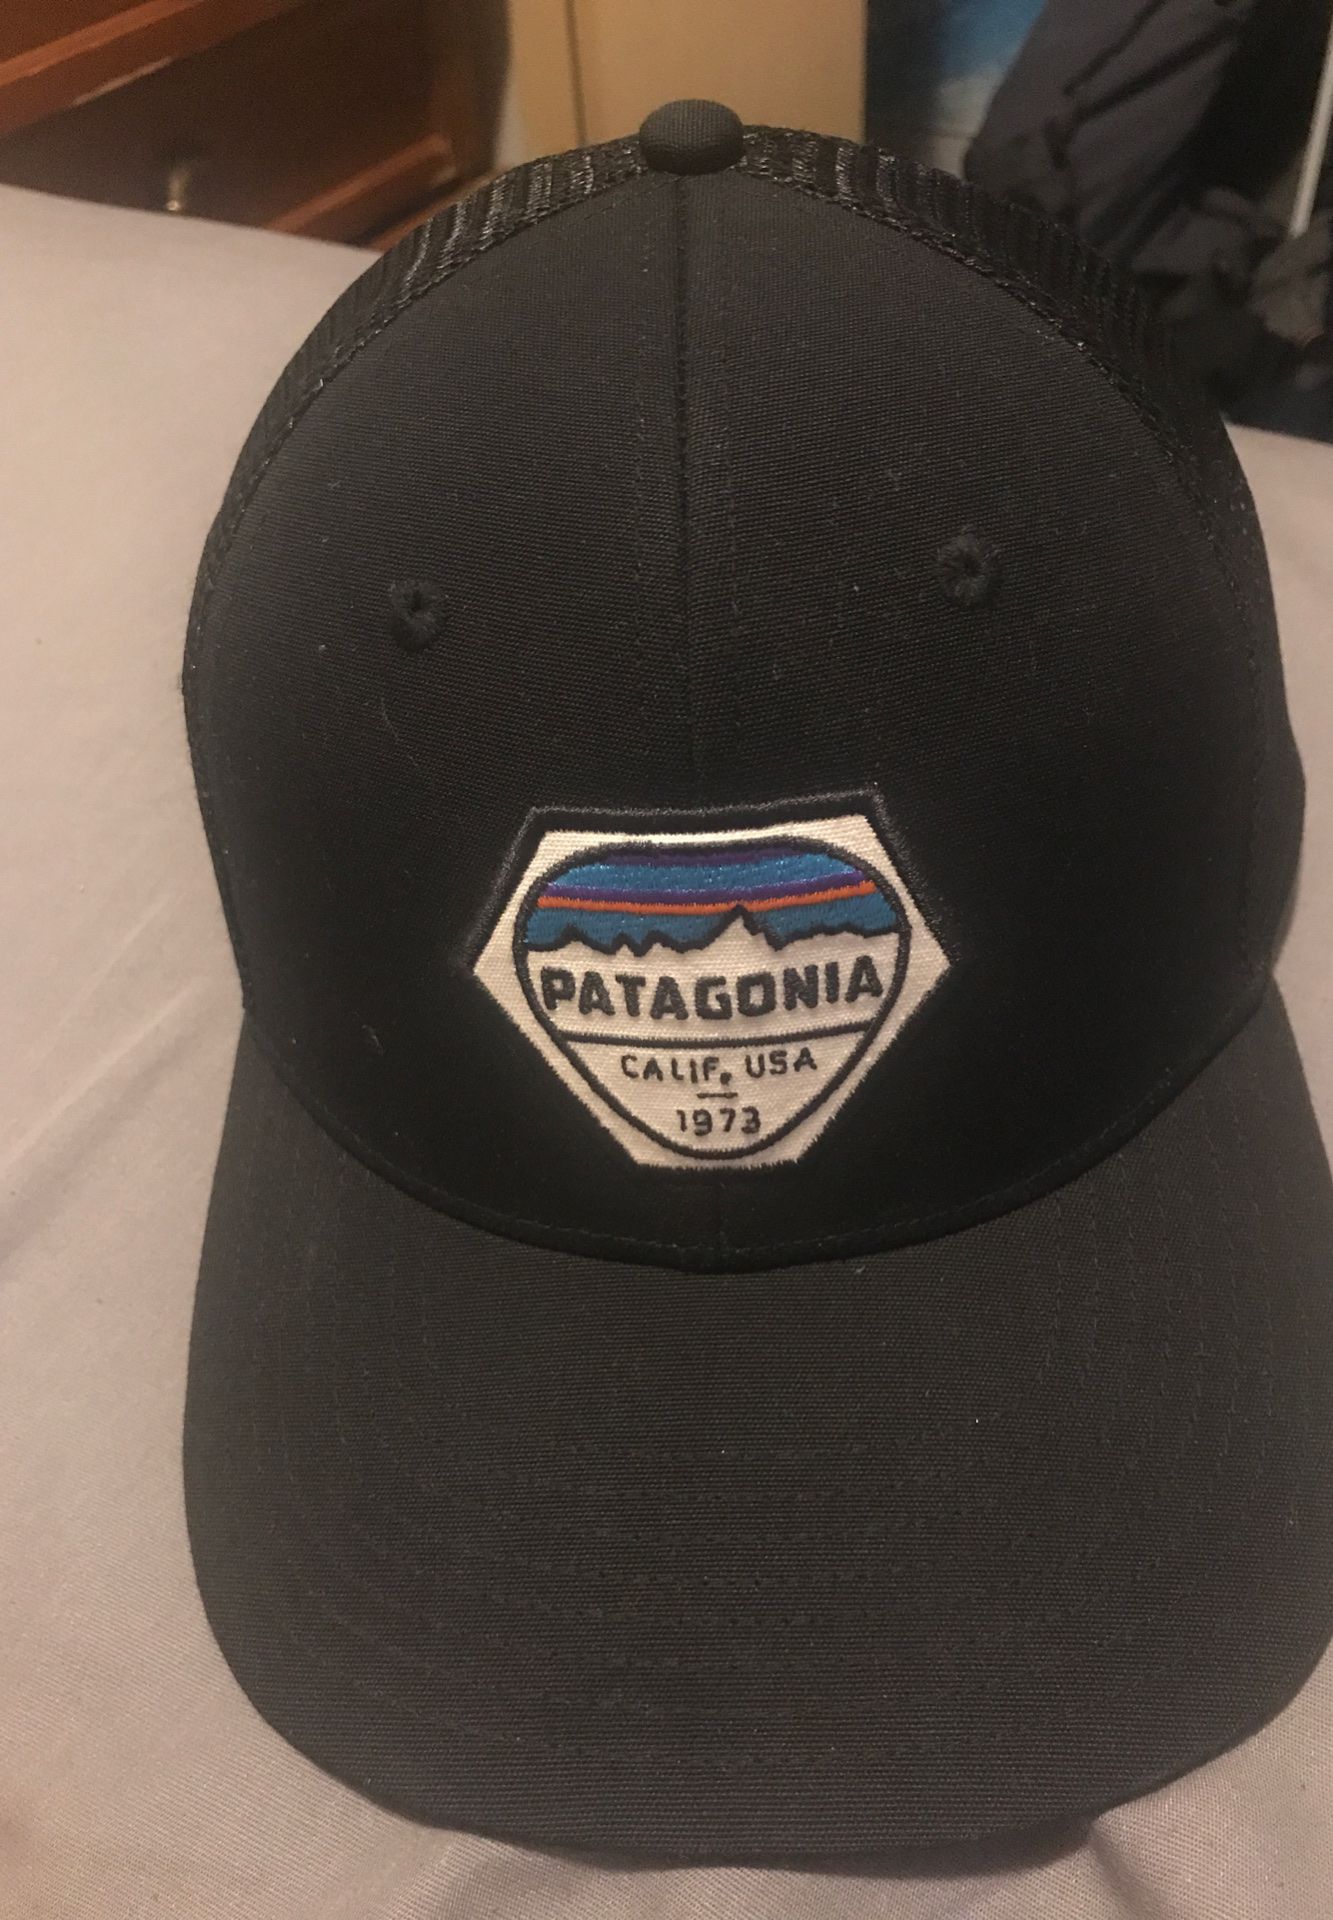 Patagonia hat